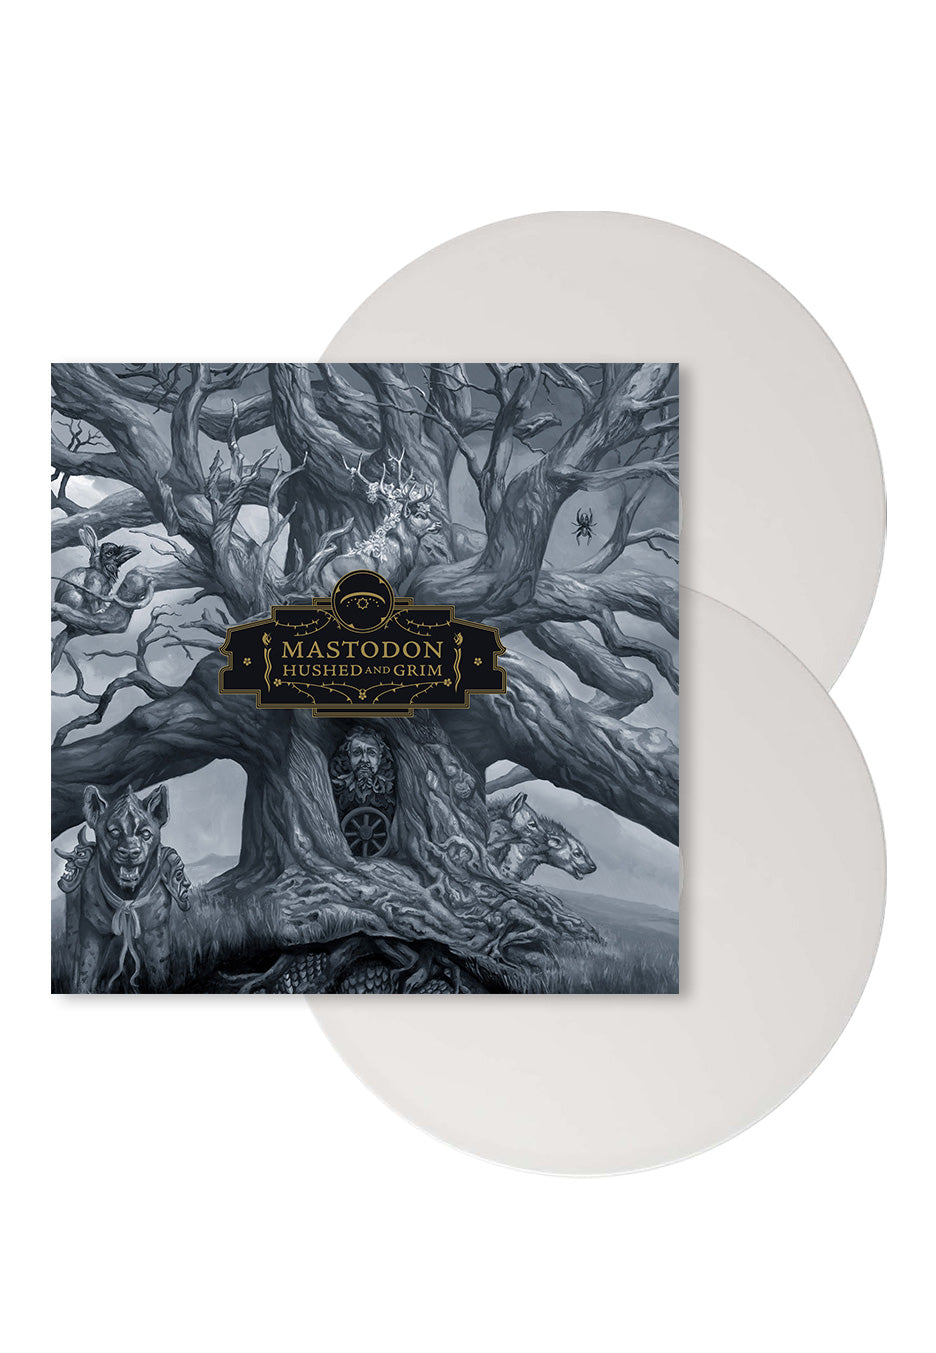 Mastodon - Hushed And Grim Ltd. Clear - Colored 2 Vinyl